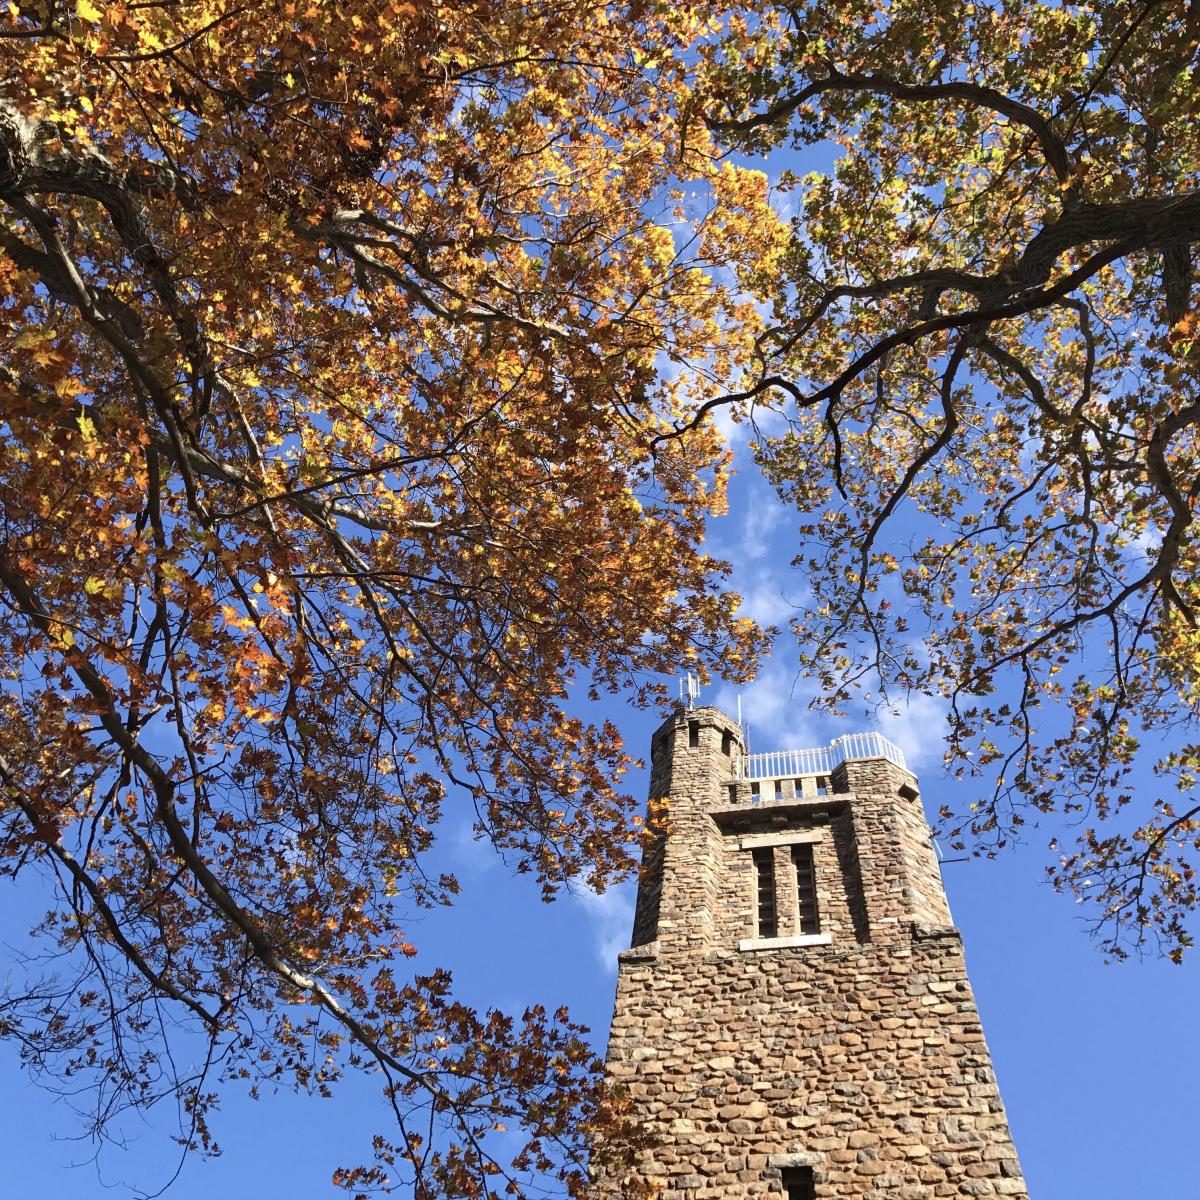 Fall at Bowman's Hill Tower